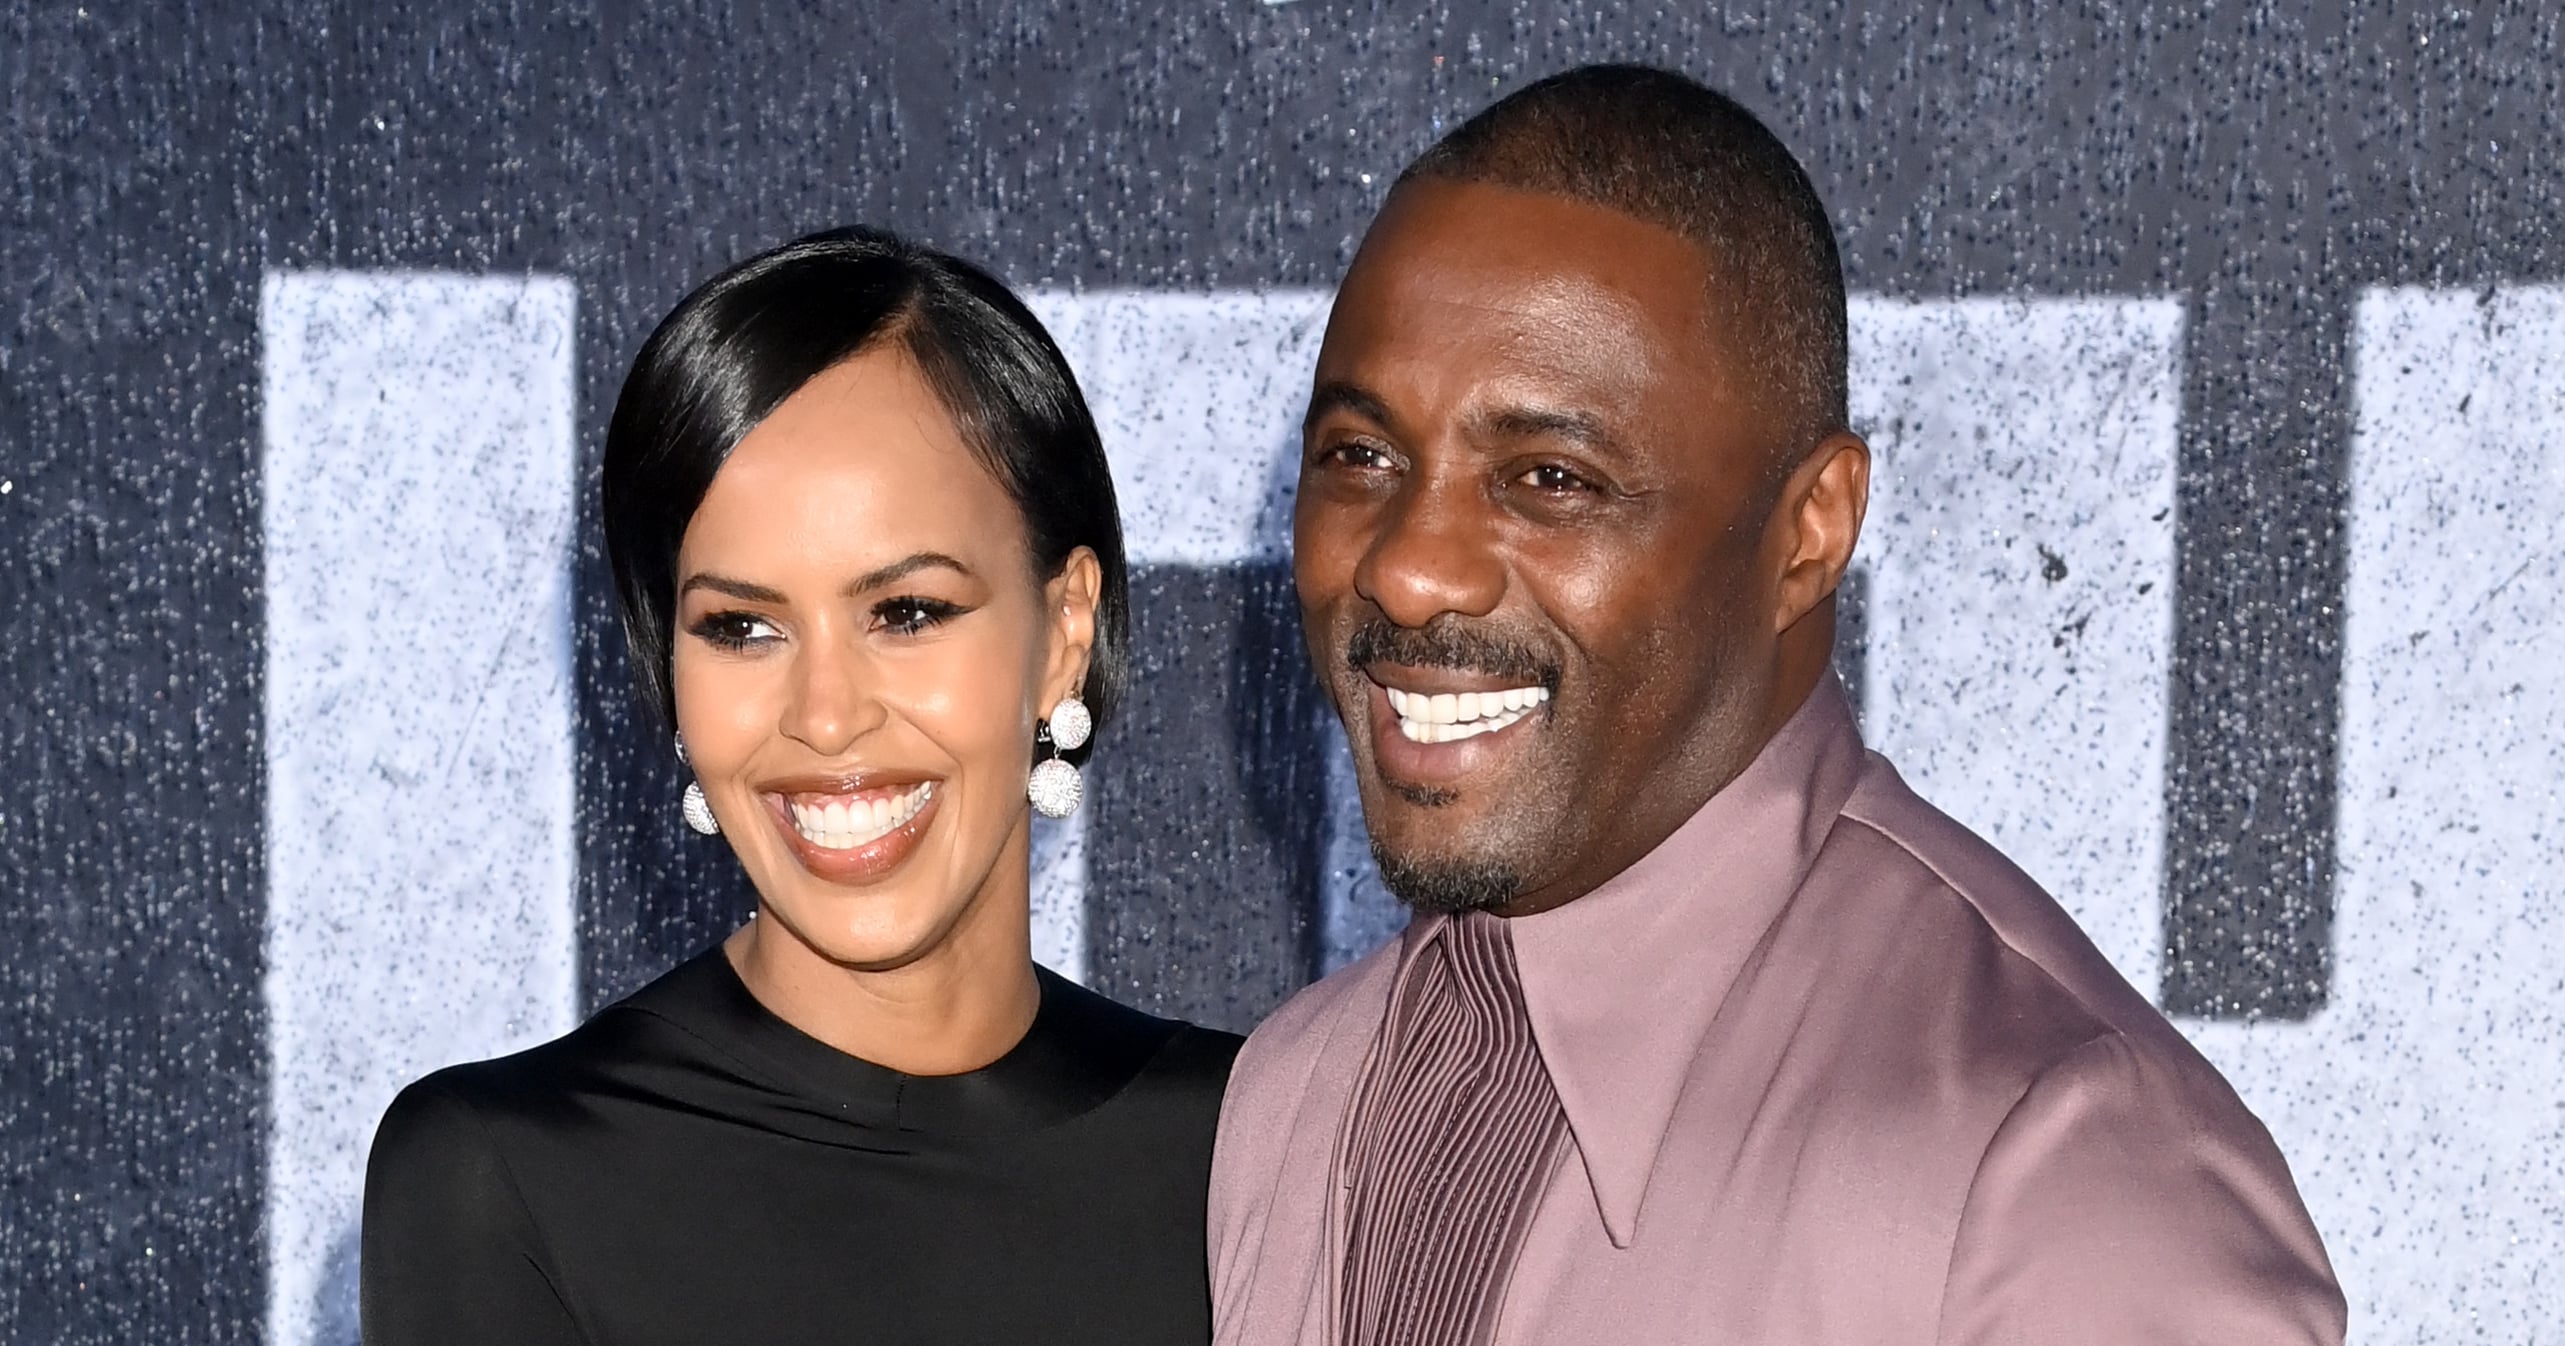 Who Is Idris Elba's Wife? | POPSUGAR Celebrity